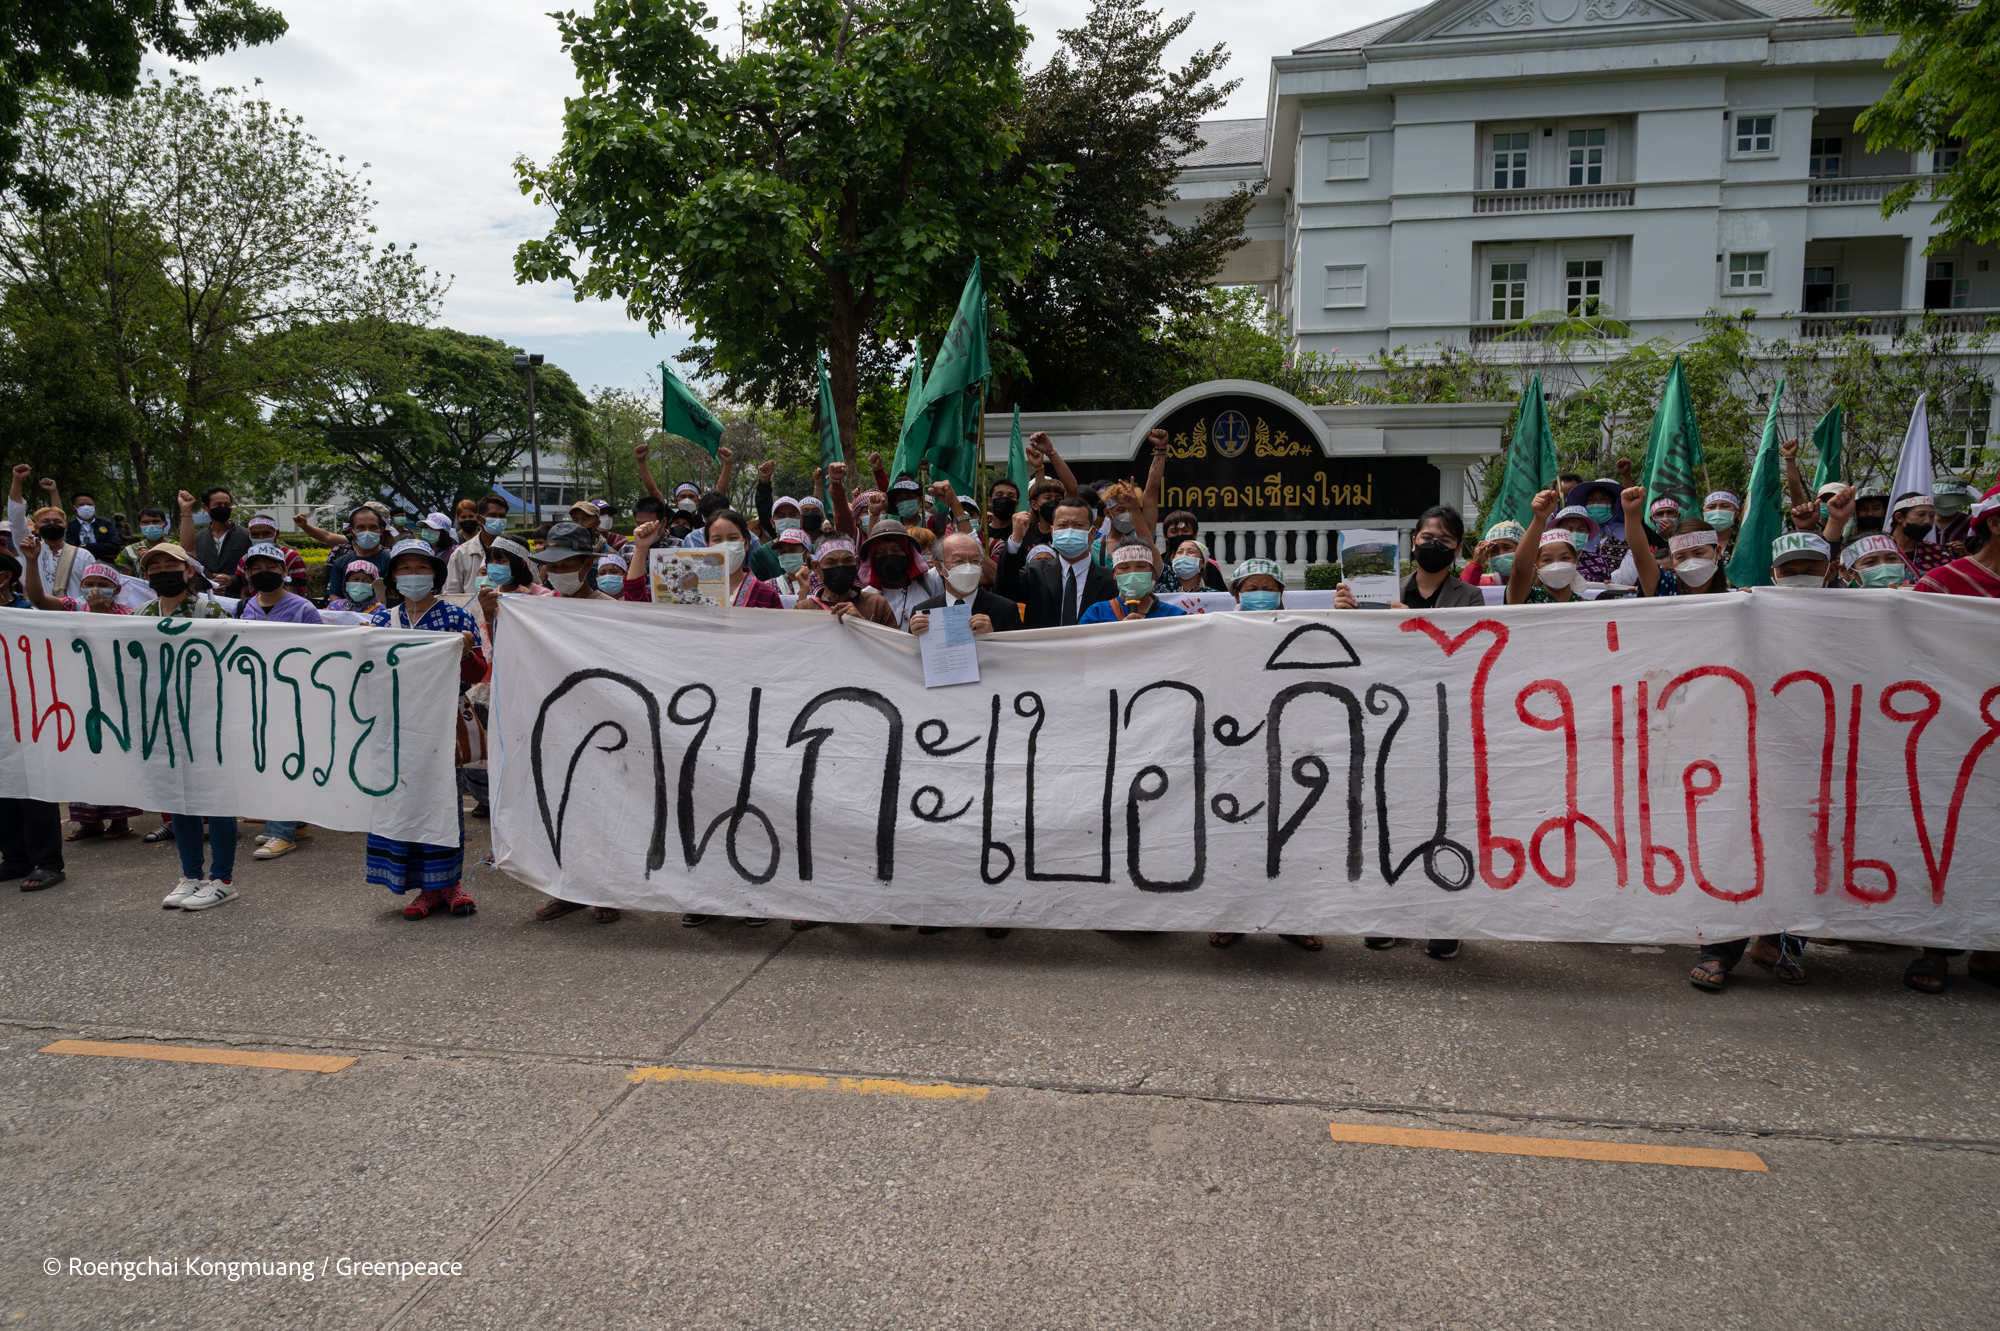 Omkoi community file lawsuit against Thai agencies